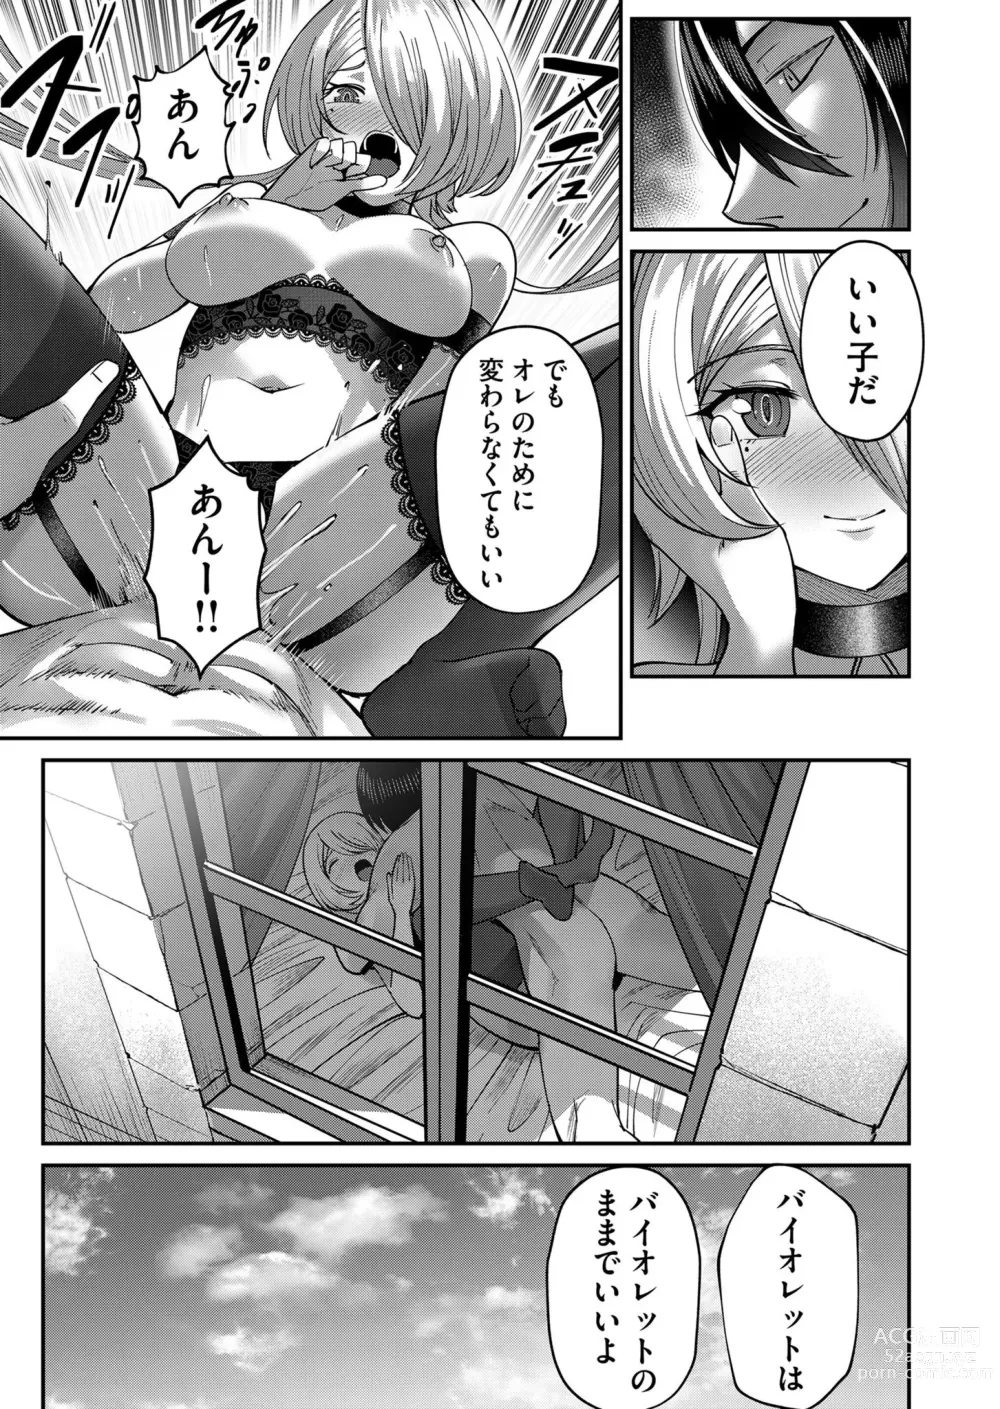 Page 193 of manga Kichiku Eiyuu Vol.01